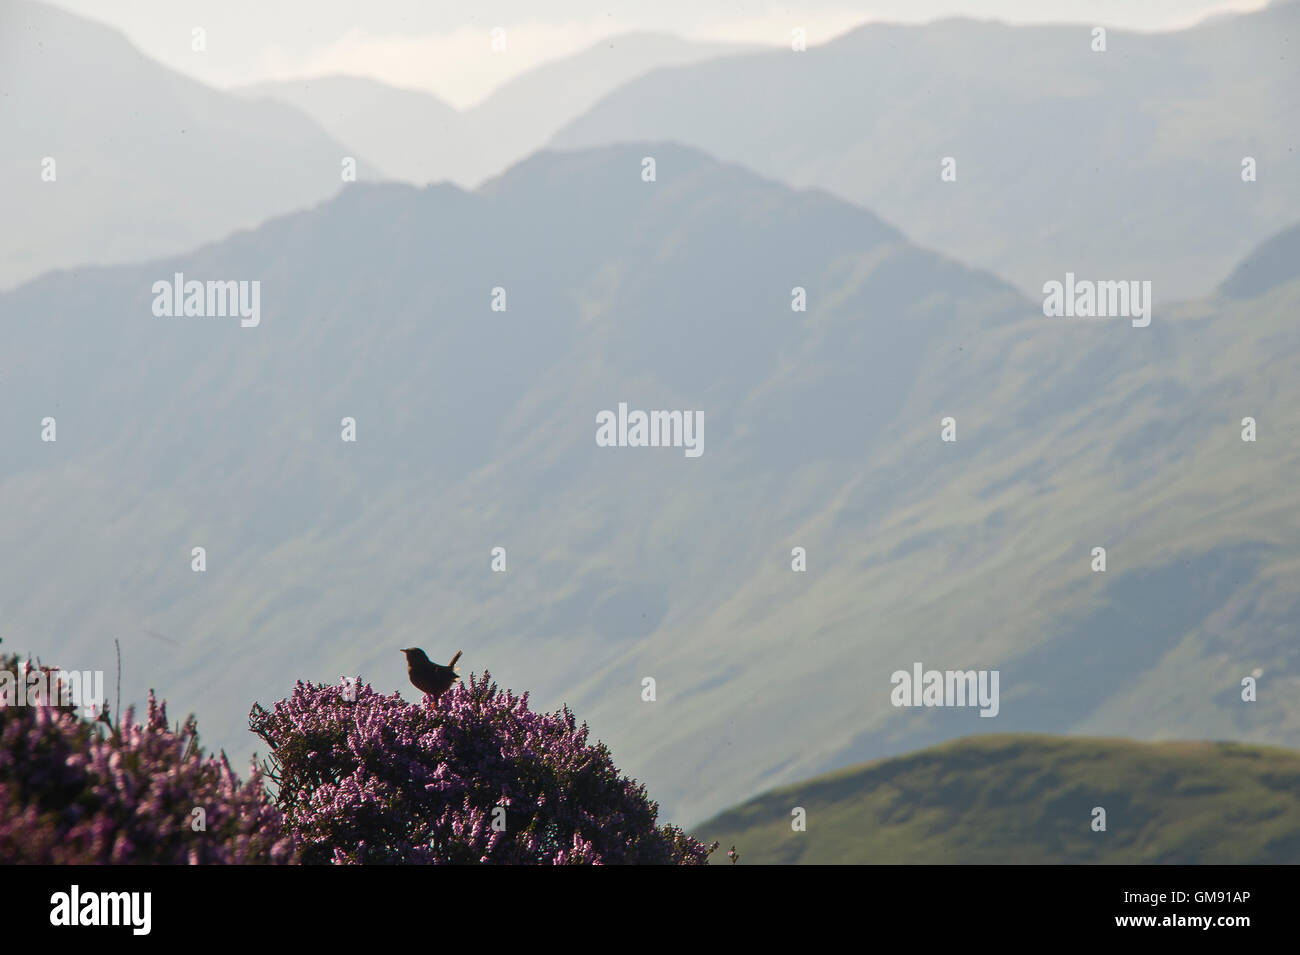 Songbird, Wren?, singing on flowering heather in Lake district mountains Stock Photo